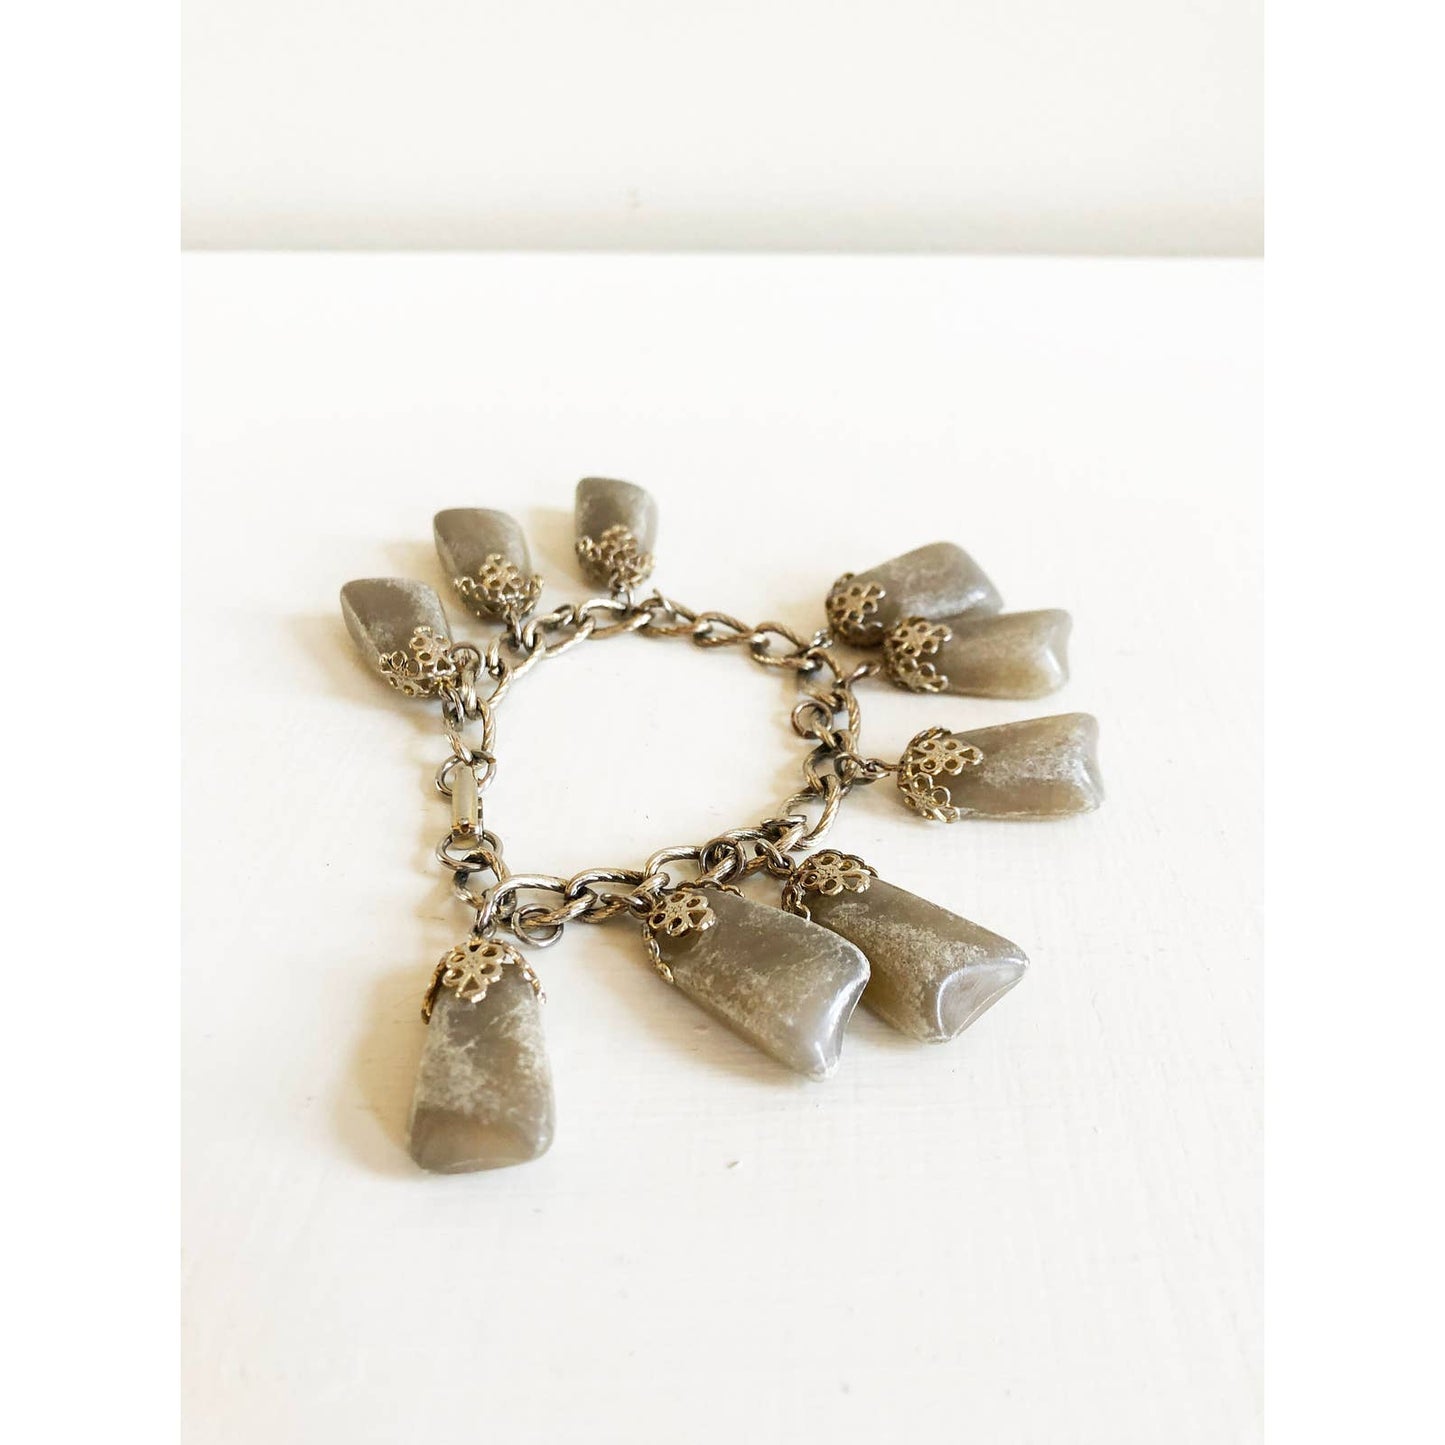 Mystical Vintage Rock Charm Bracelet